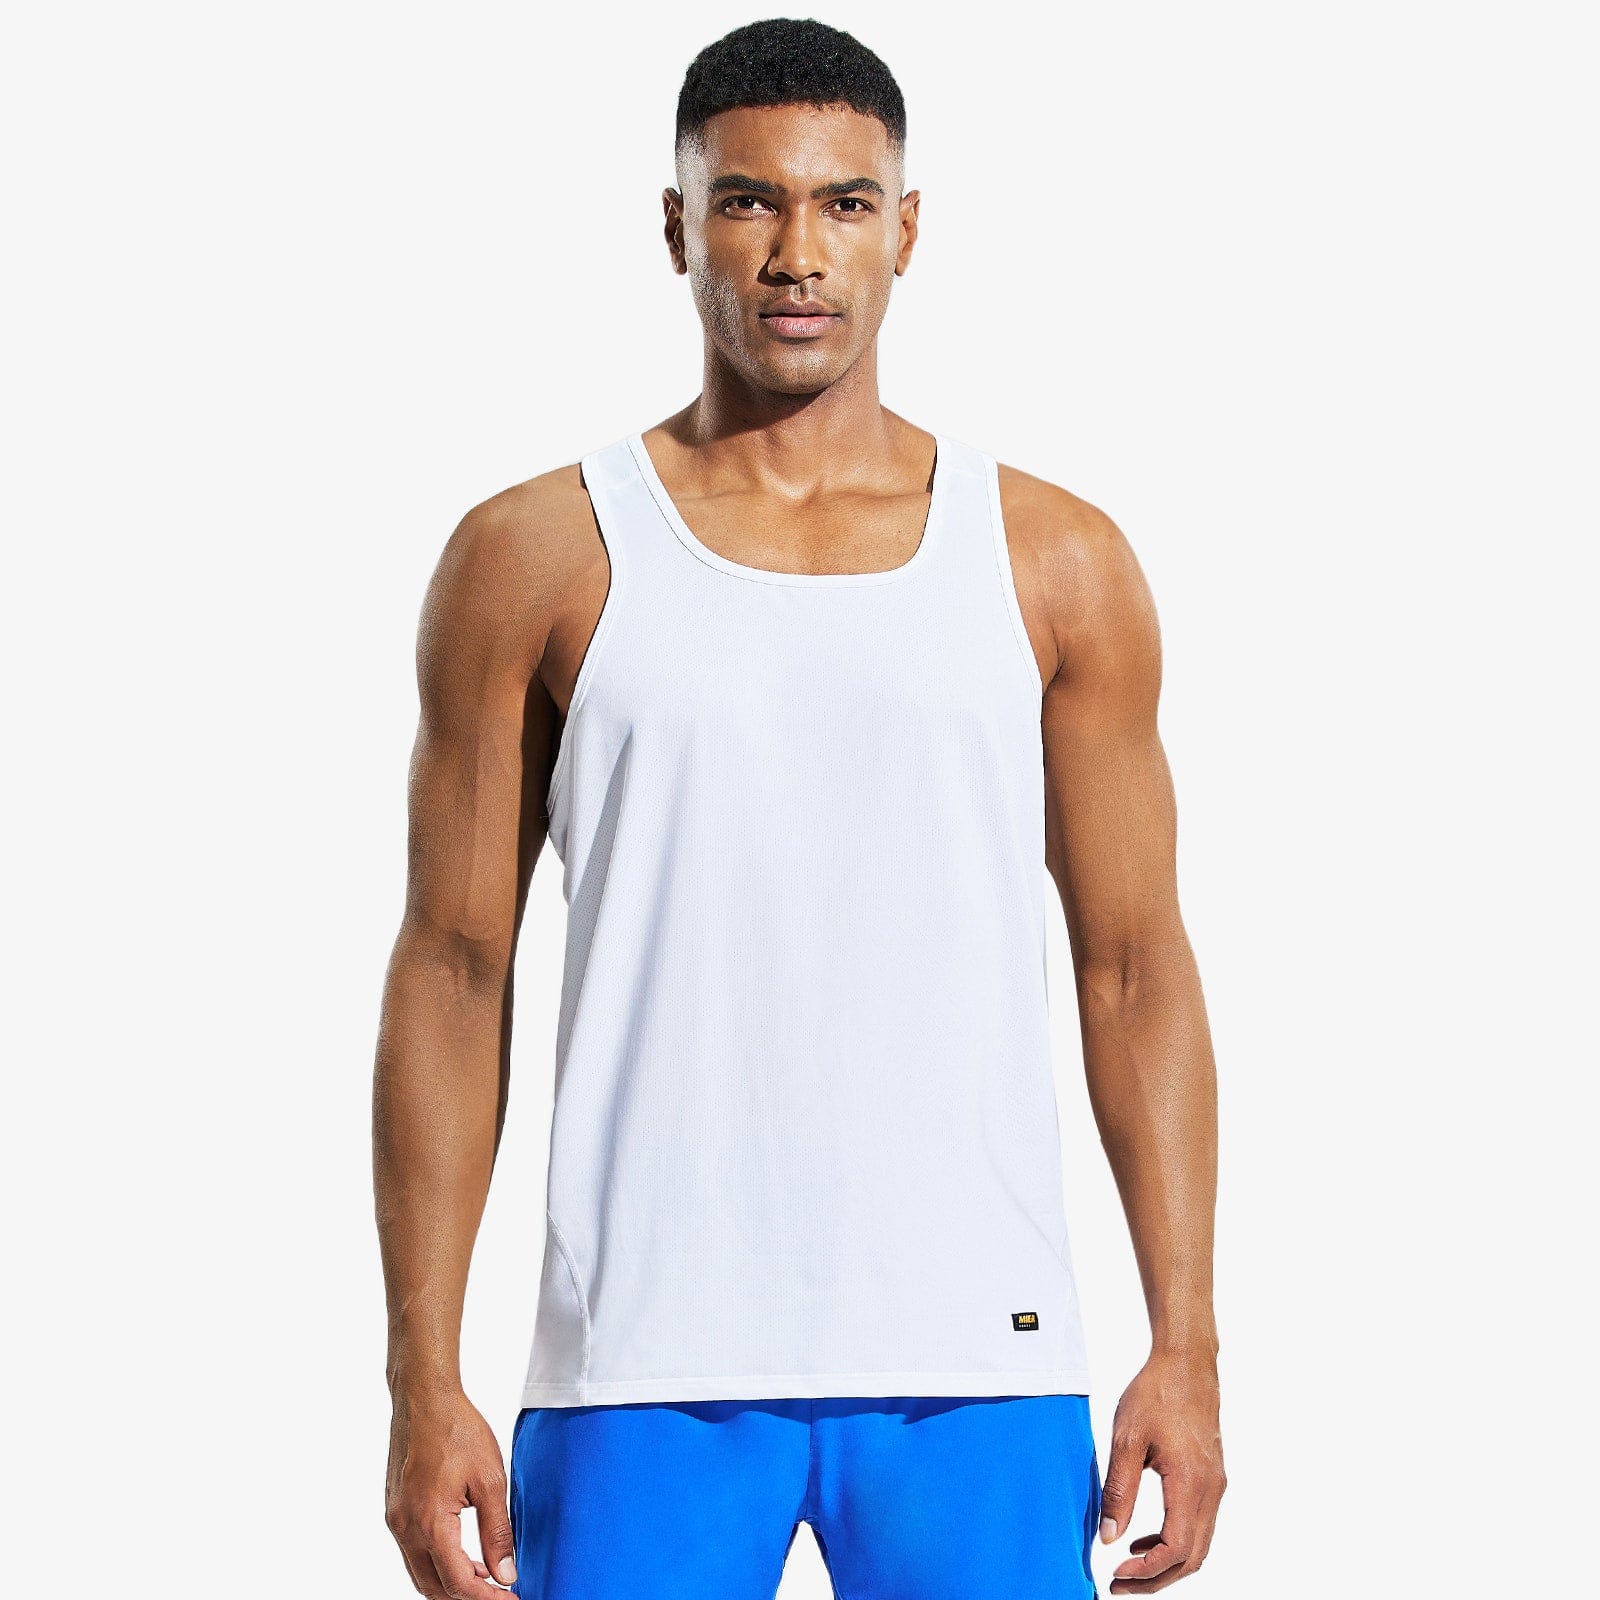 Men's Sleeveless Workout Shirts Quick Dry Athletic Tanks - White / S